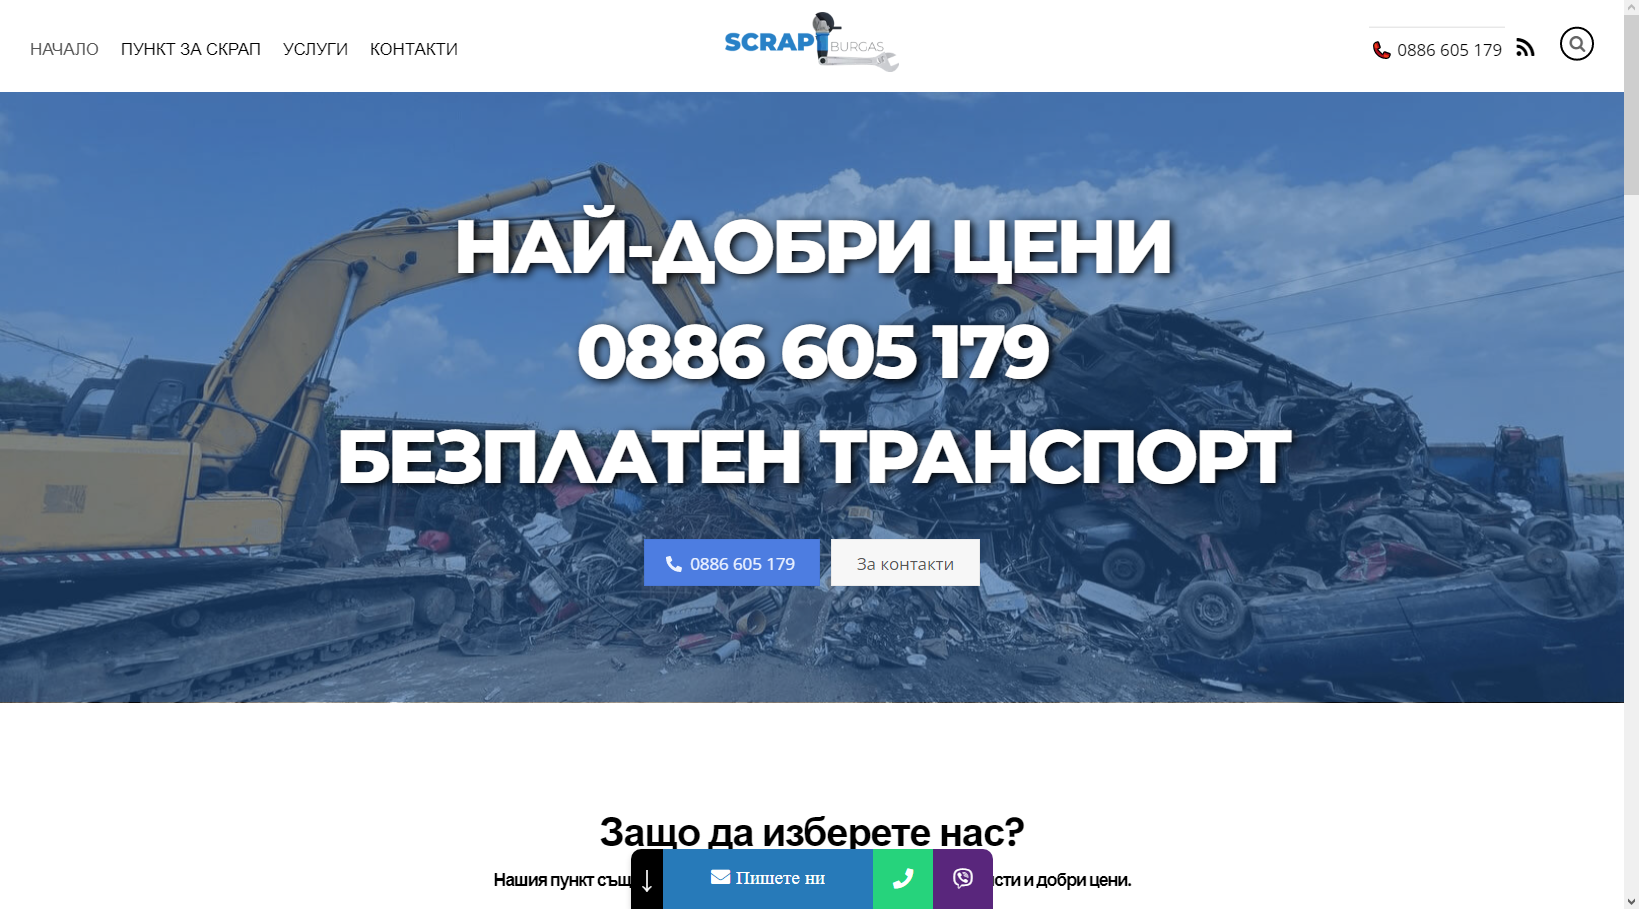 Scrap-Burgas.com - изграждане на уебсайт и локално основно SEO - скрап и изкупуване на метали Бургас и околия